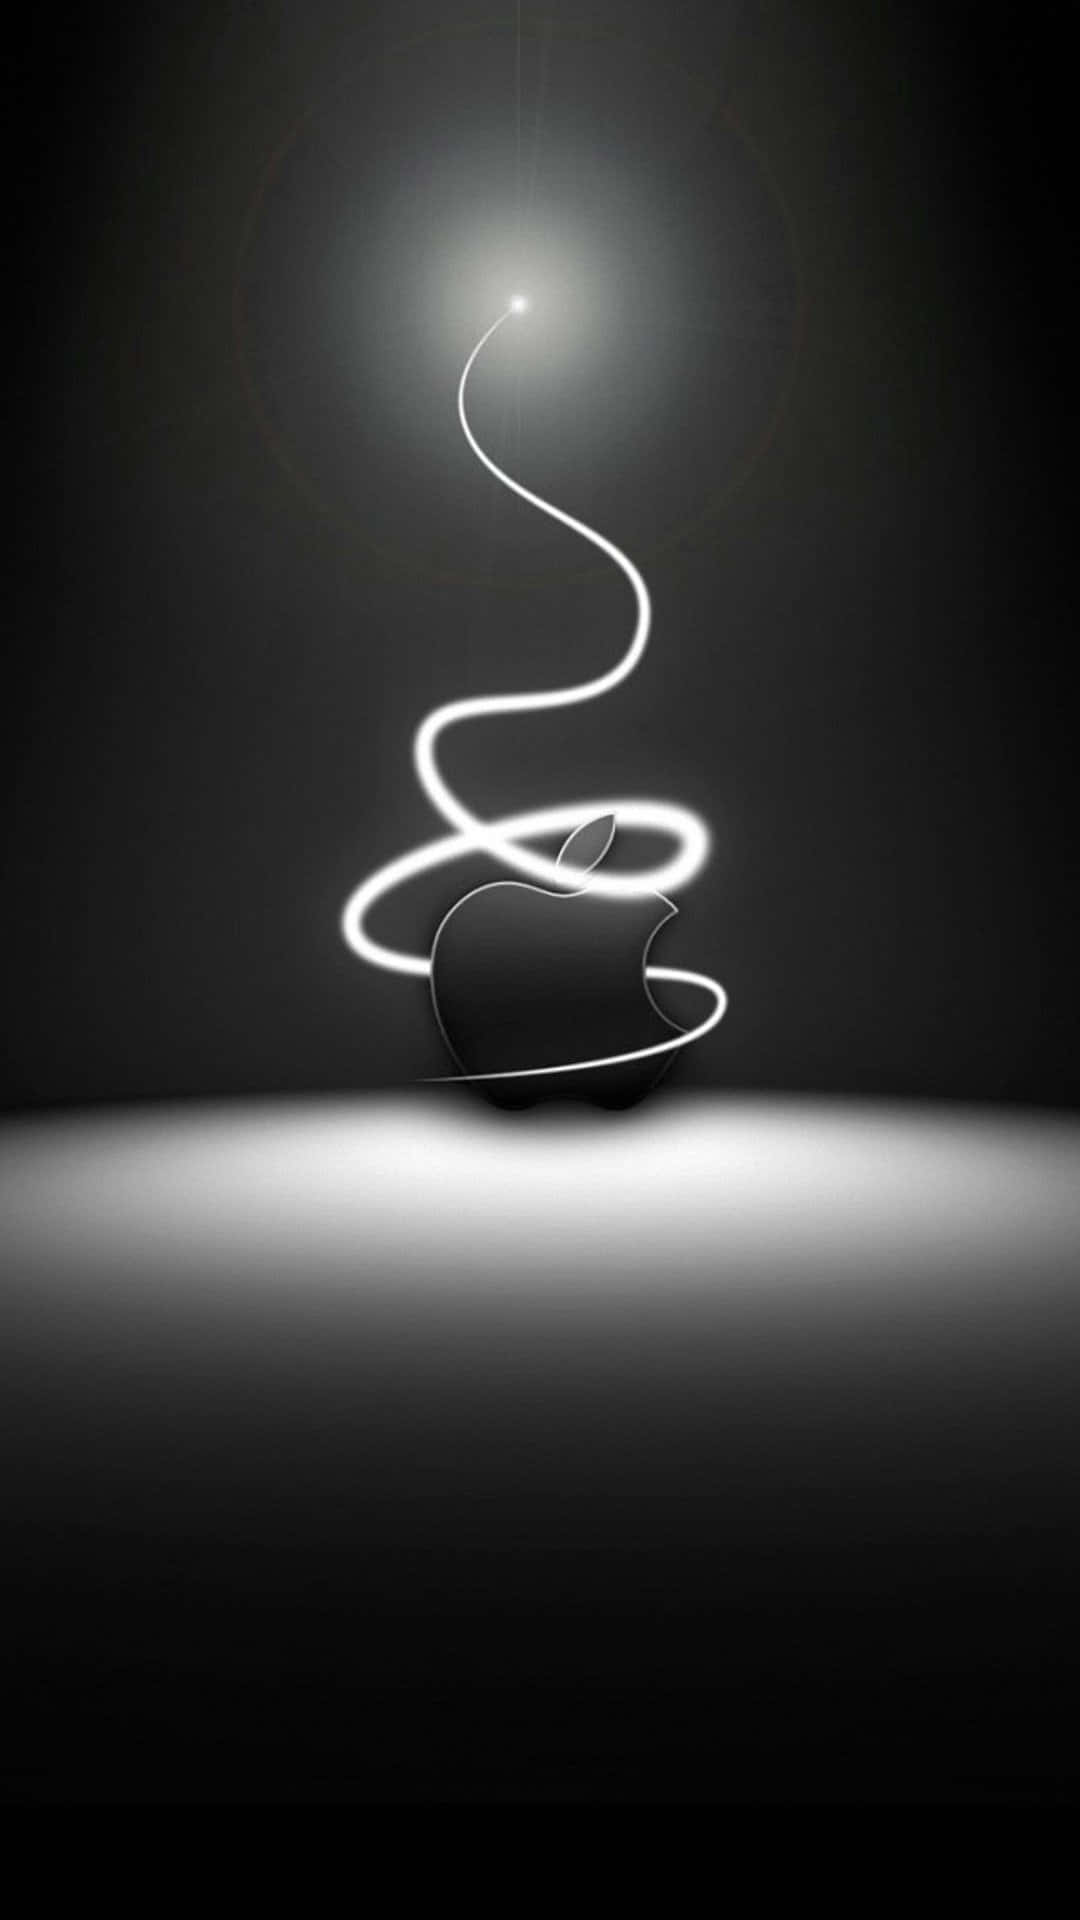 White Light Swirl Amazing Apple Hd Iphone